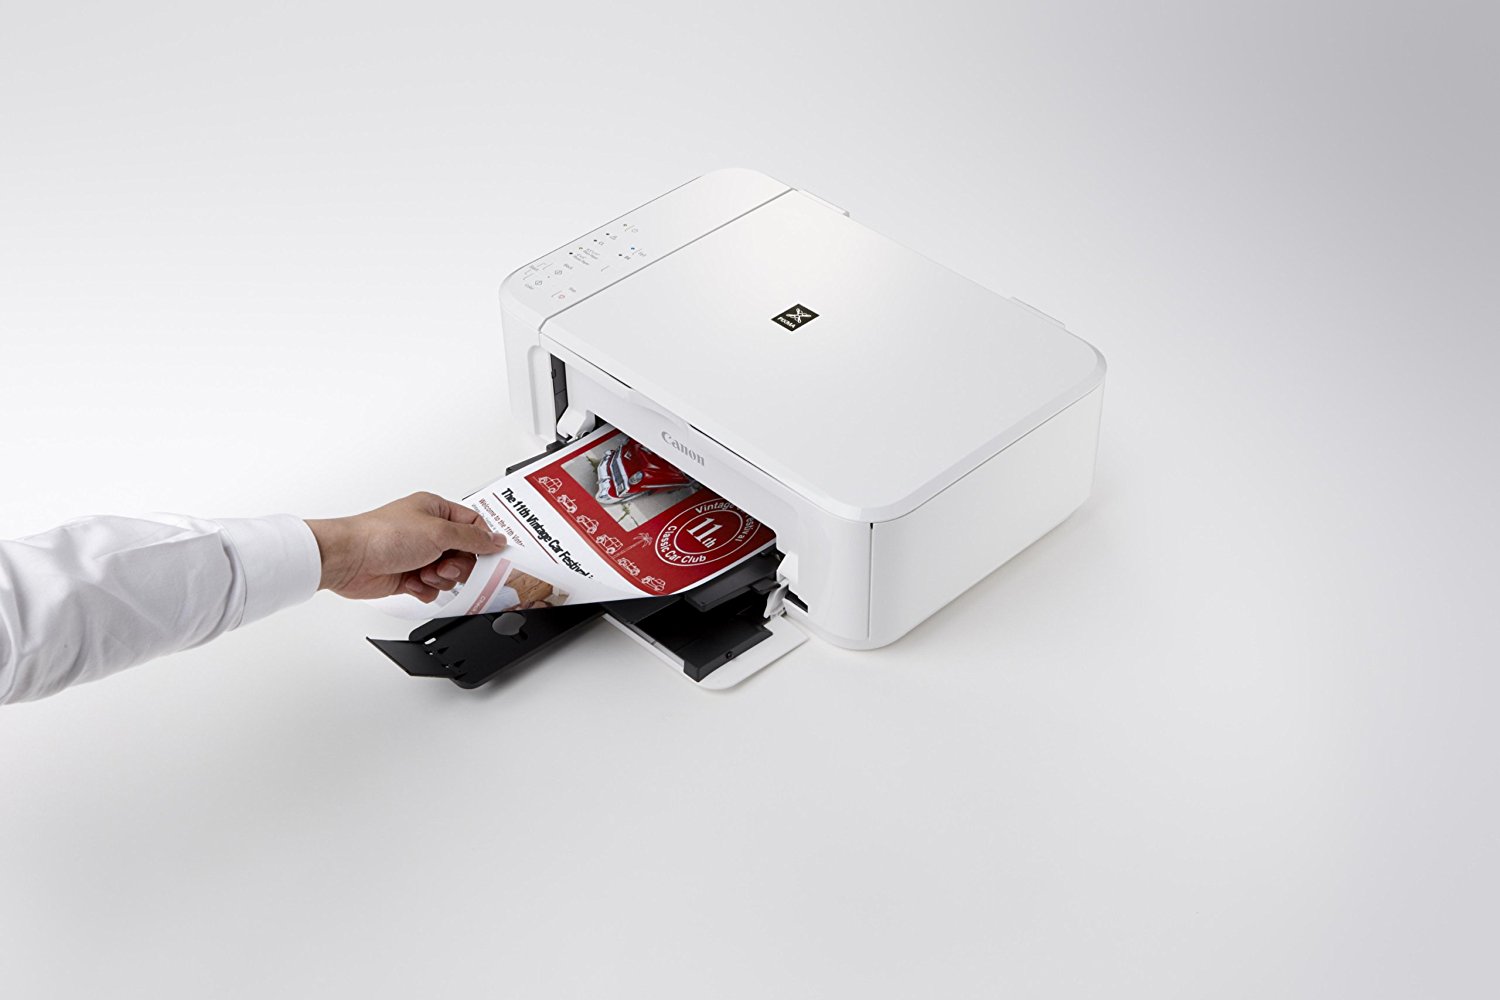 stampante-multifunzione-canon-pixma-mg3550-inkjet-4800x1200-dpi-4